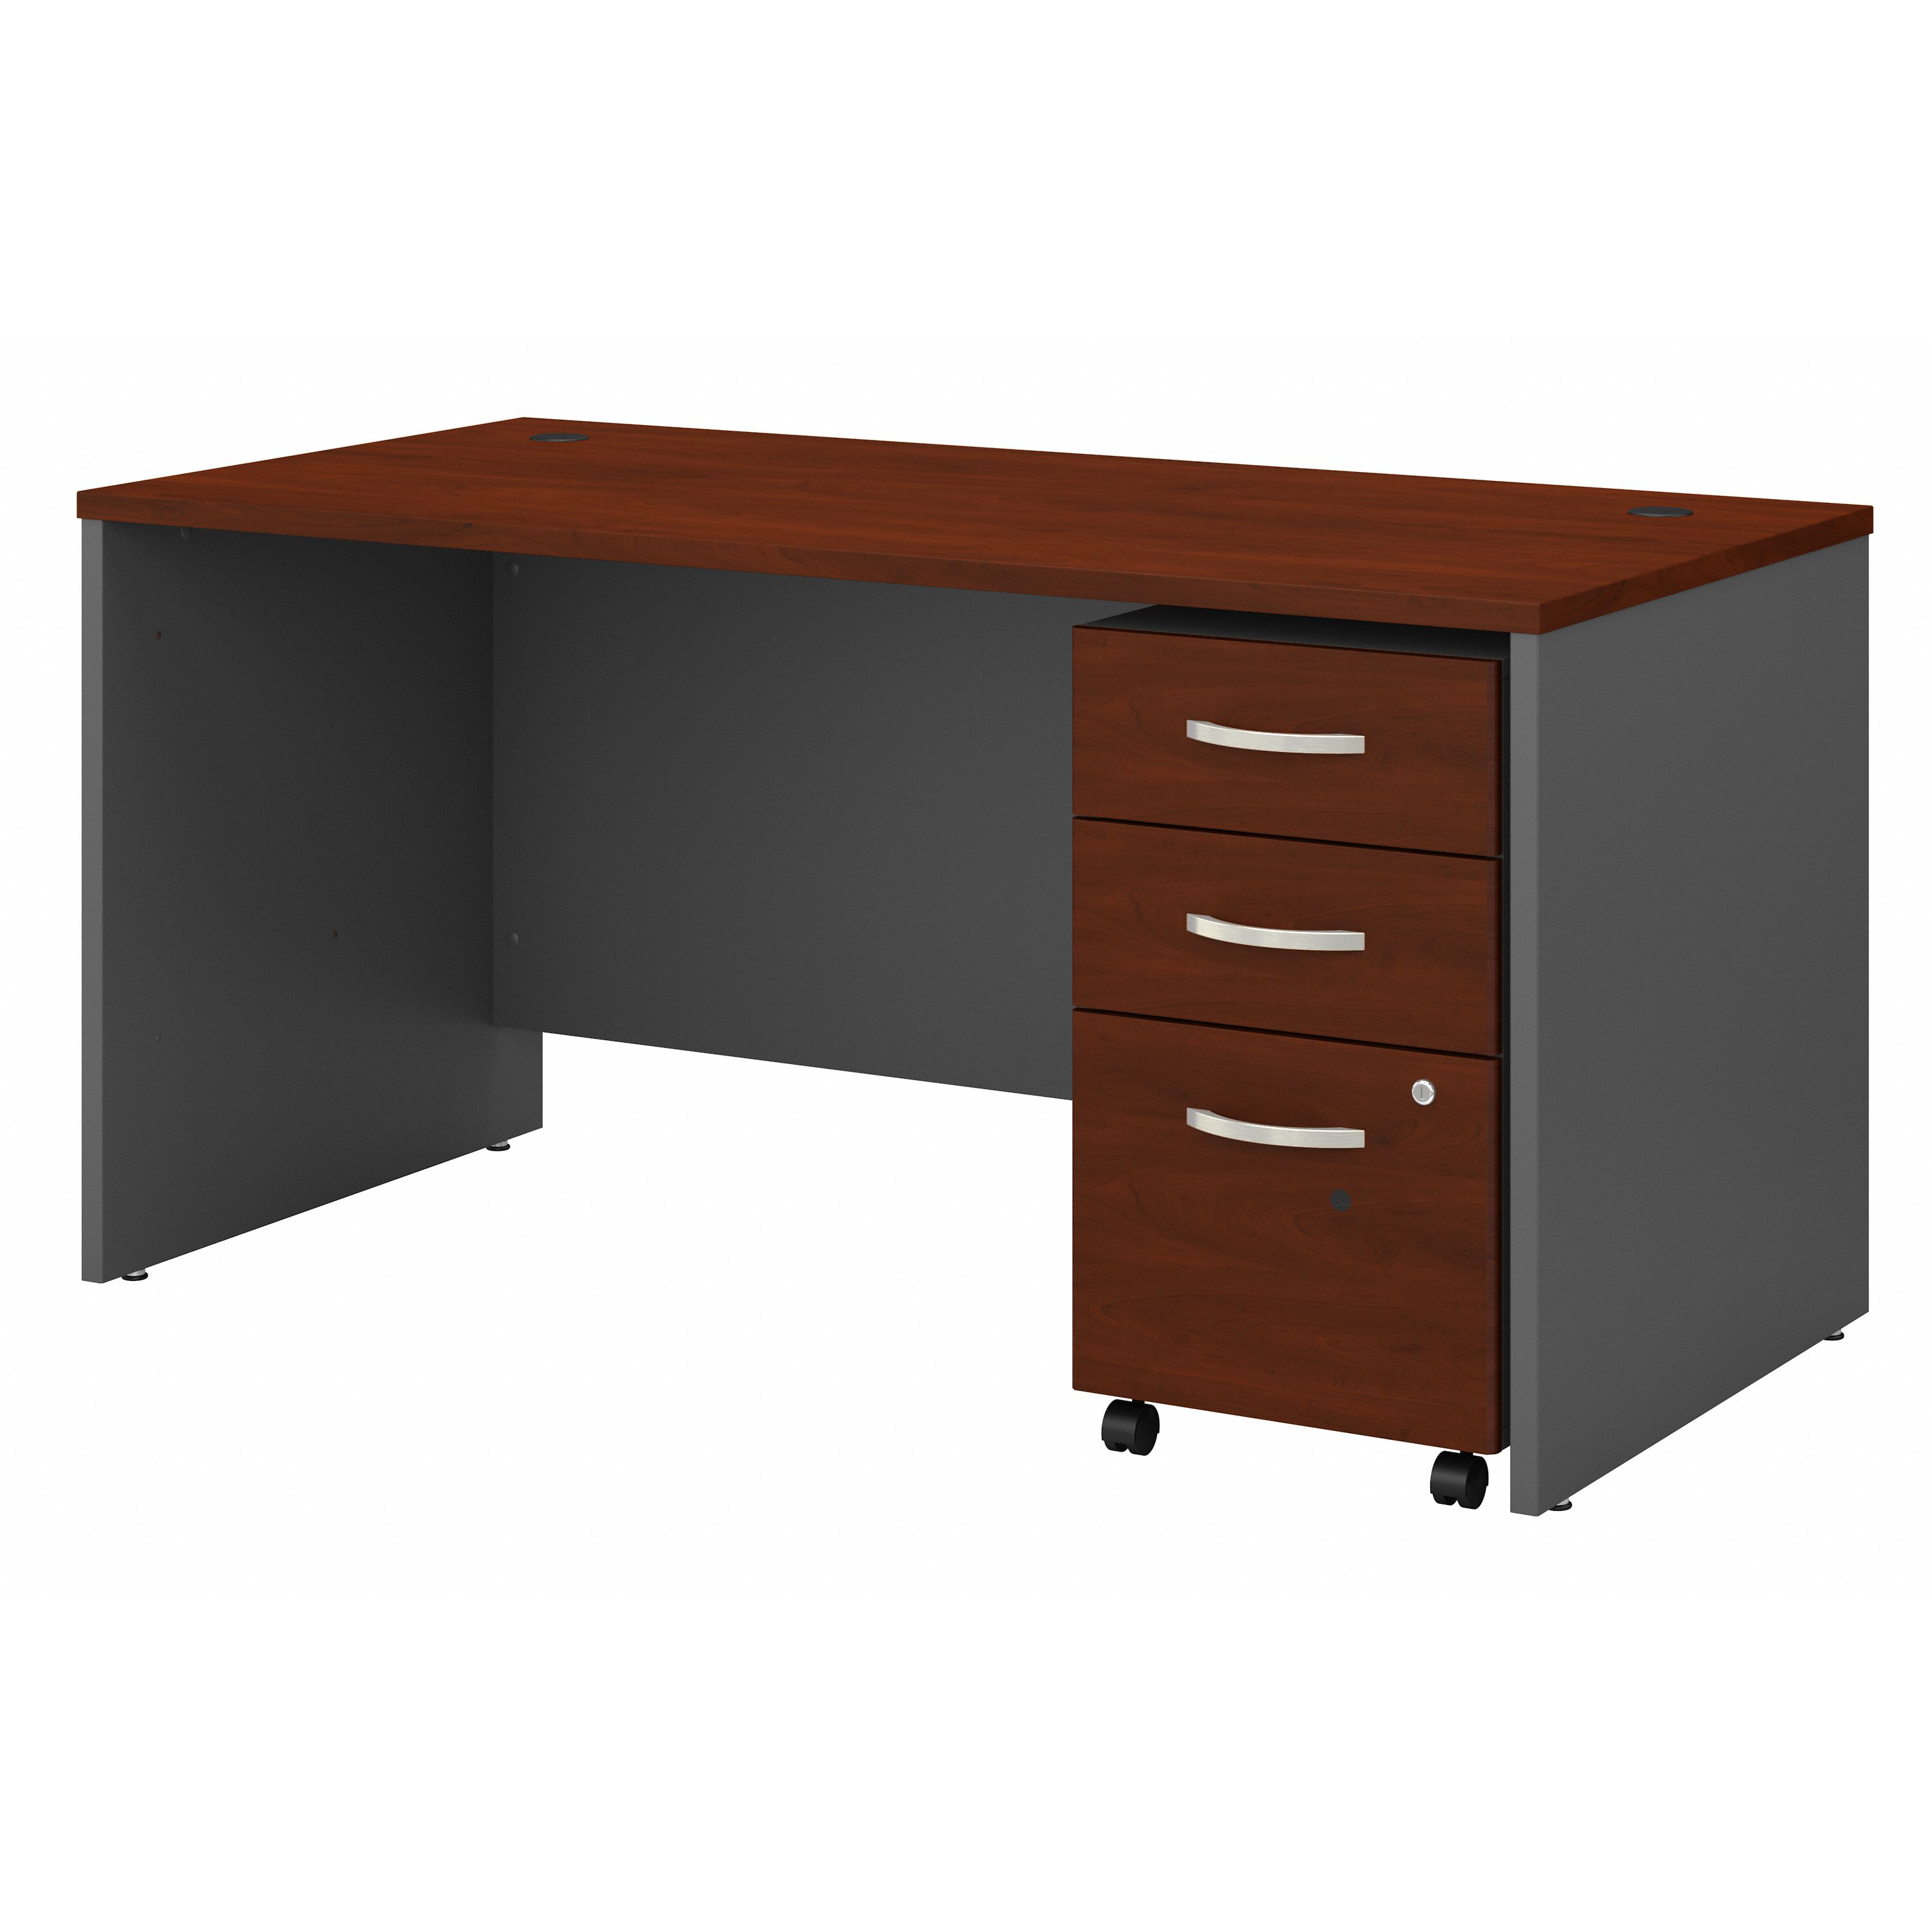 Shop Bush Business Furniture Series C 60W x 30D Office Desk with 3 Drawer Mobile File Cabinet 02 SRC144HCSU #color_hansen cherry/graphite gray